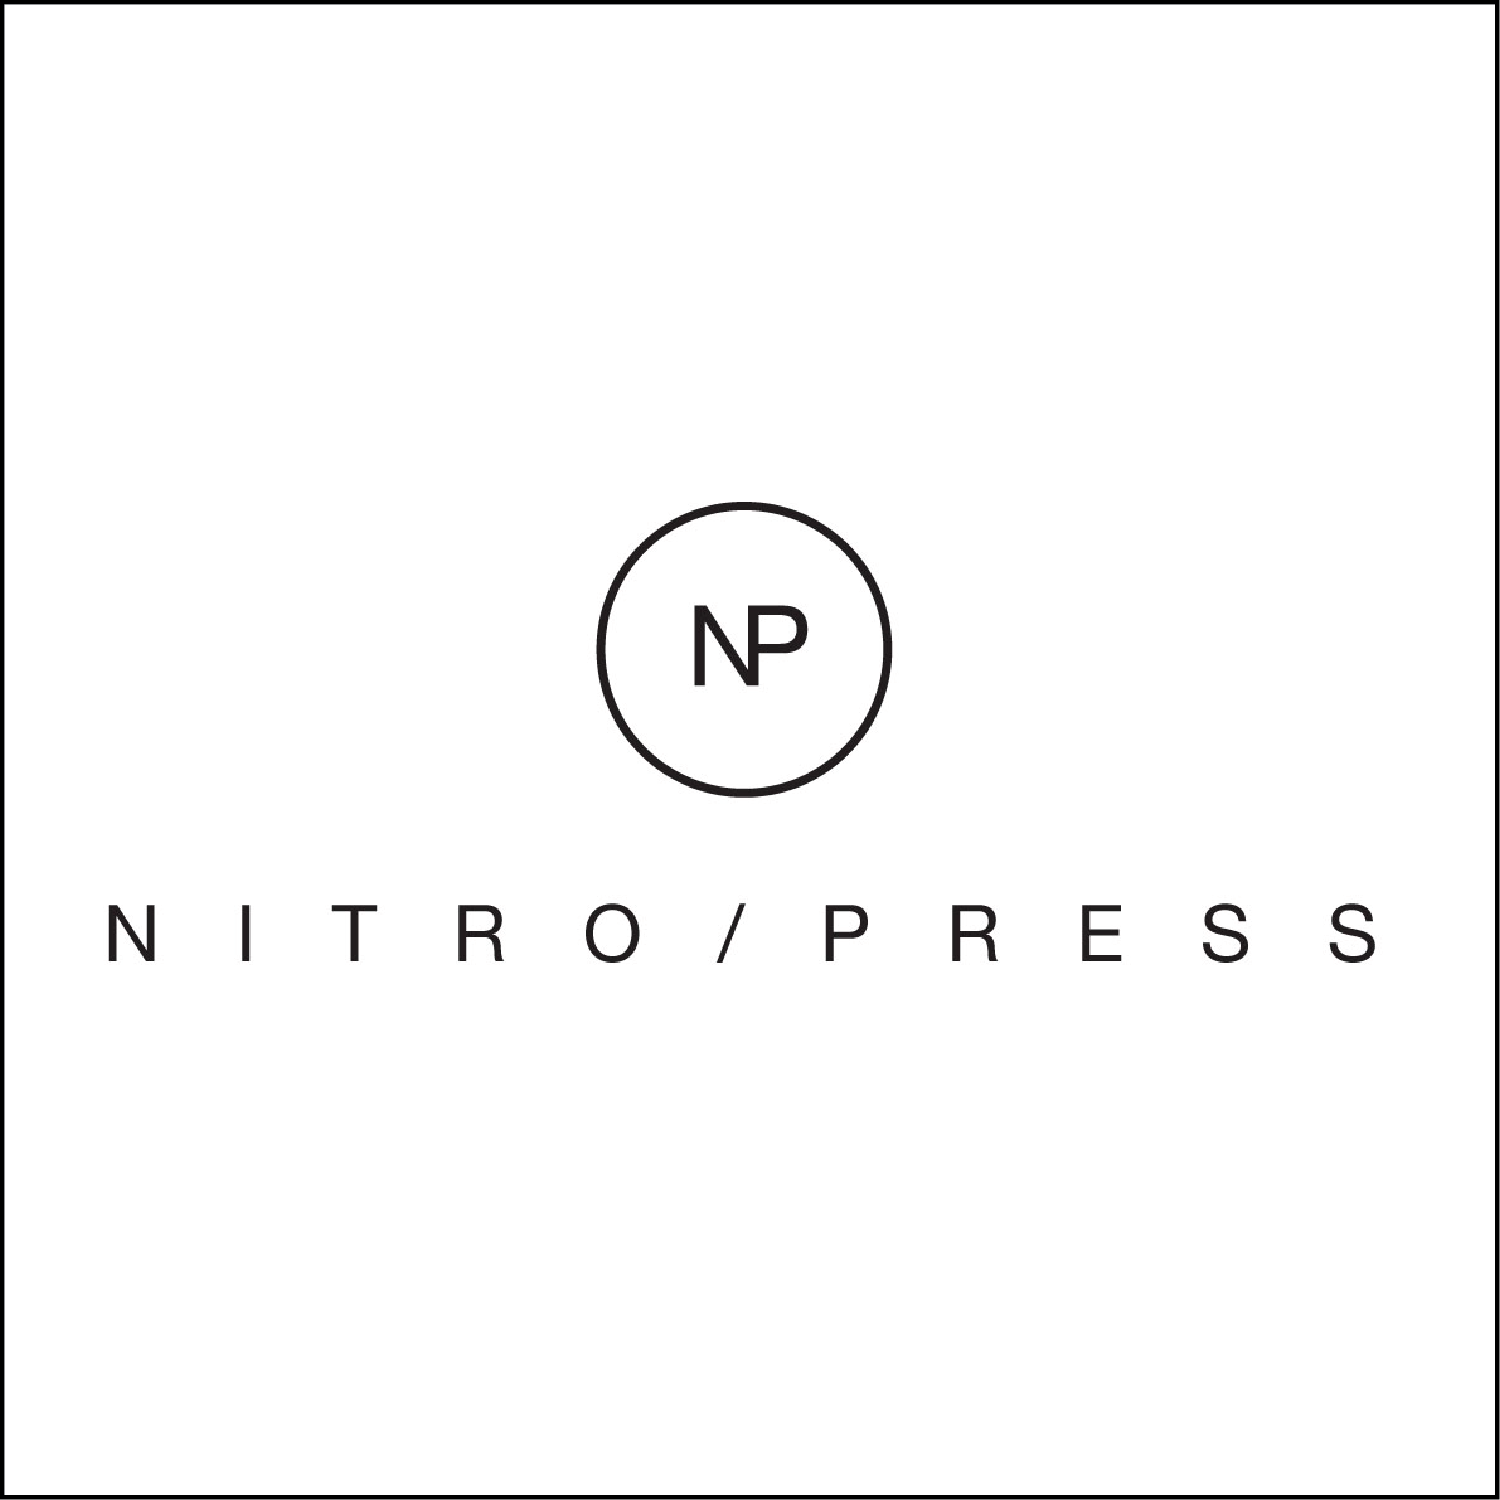 NITRO/PRESS